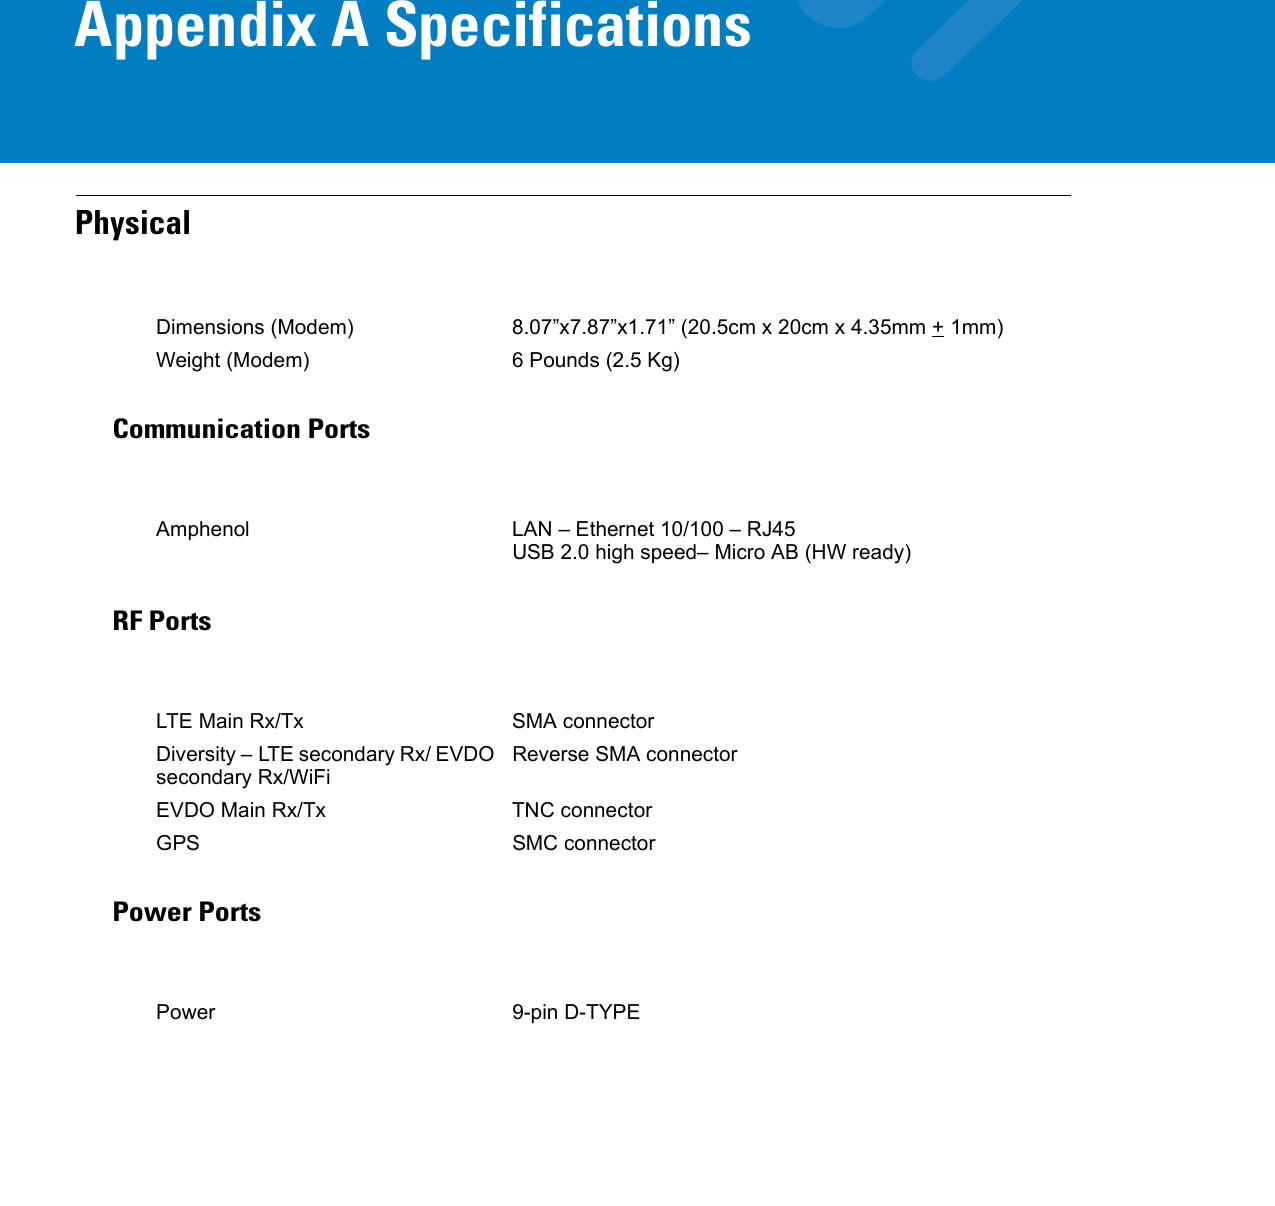 Appendix A SpecificationsPhysicalCommunication PortsRF PortsPower PortsDimensions (Modem) 8.07”x7.87”x1.71” (20.5cm x 20cm x 4.35mm + 1mm)Weight (Modem) 6 Pounds (2.5 Kg)Amphenol LAN – Ethernet 10/100 – RJ45USB 2.0 high speed– Micro AB (HW ready)LTE Main Rx/Tx SMA connectorDiversity – LTE secondary Rx/ EVDO secondary Rx/WiFiReverse SMA connectorEVDO Main Rx/Tx TNC connectorGPS SMC connectorPower 9-pin D-TYPE